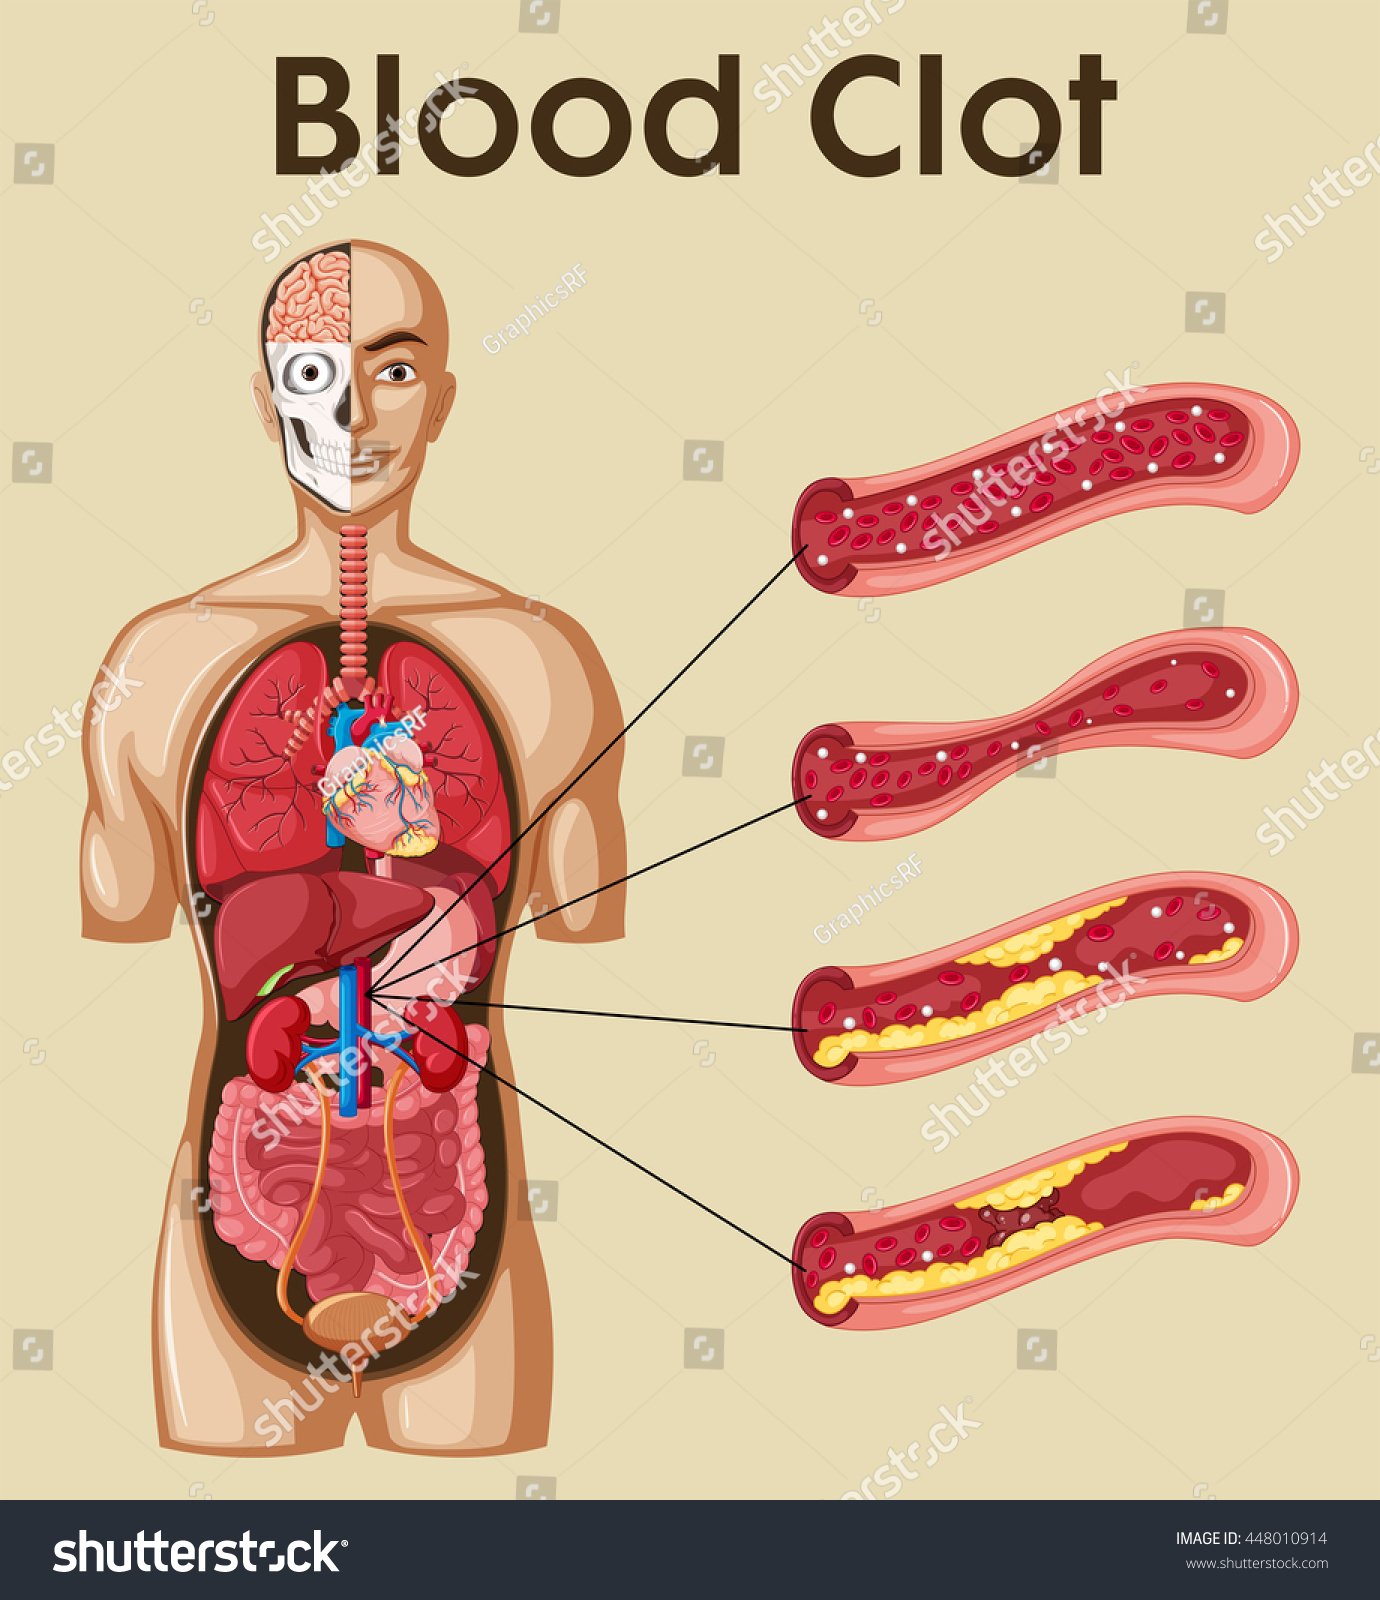 blood clot clipart - photo #15